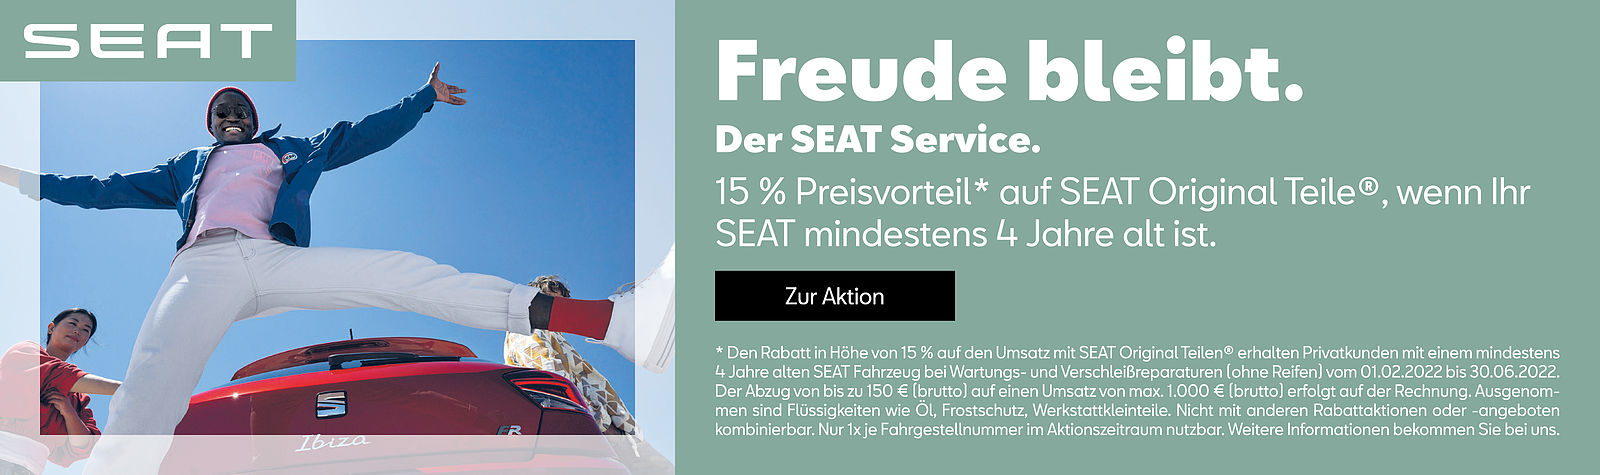 Seat Service Aktion - Freude bleibt